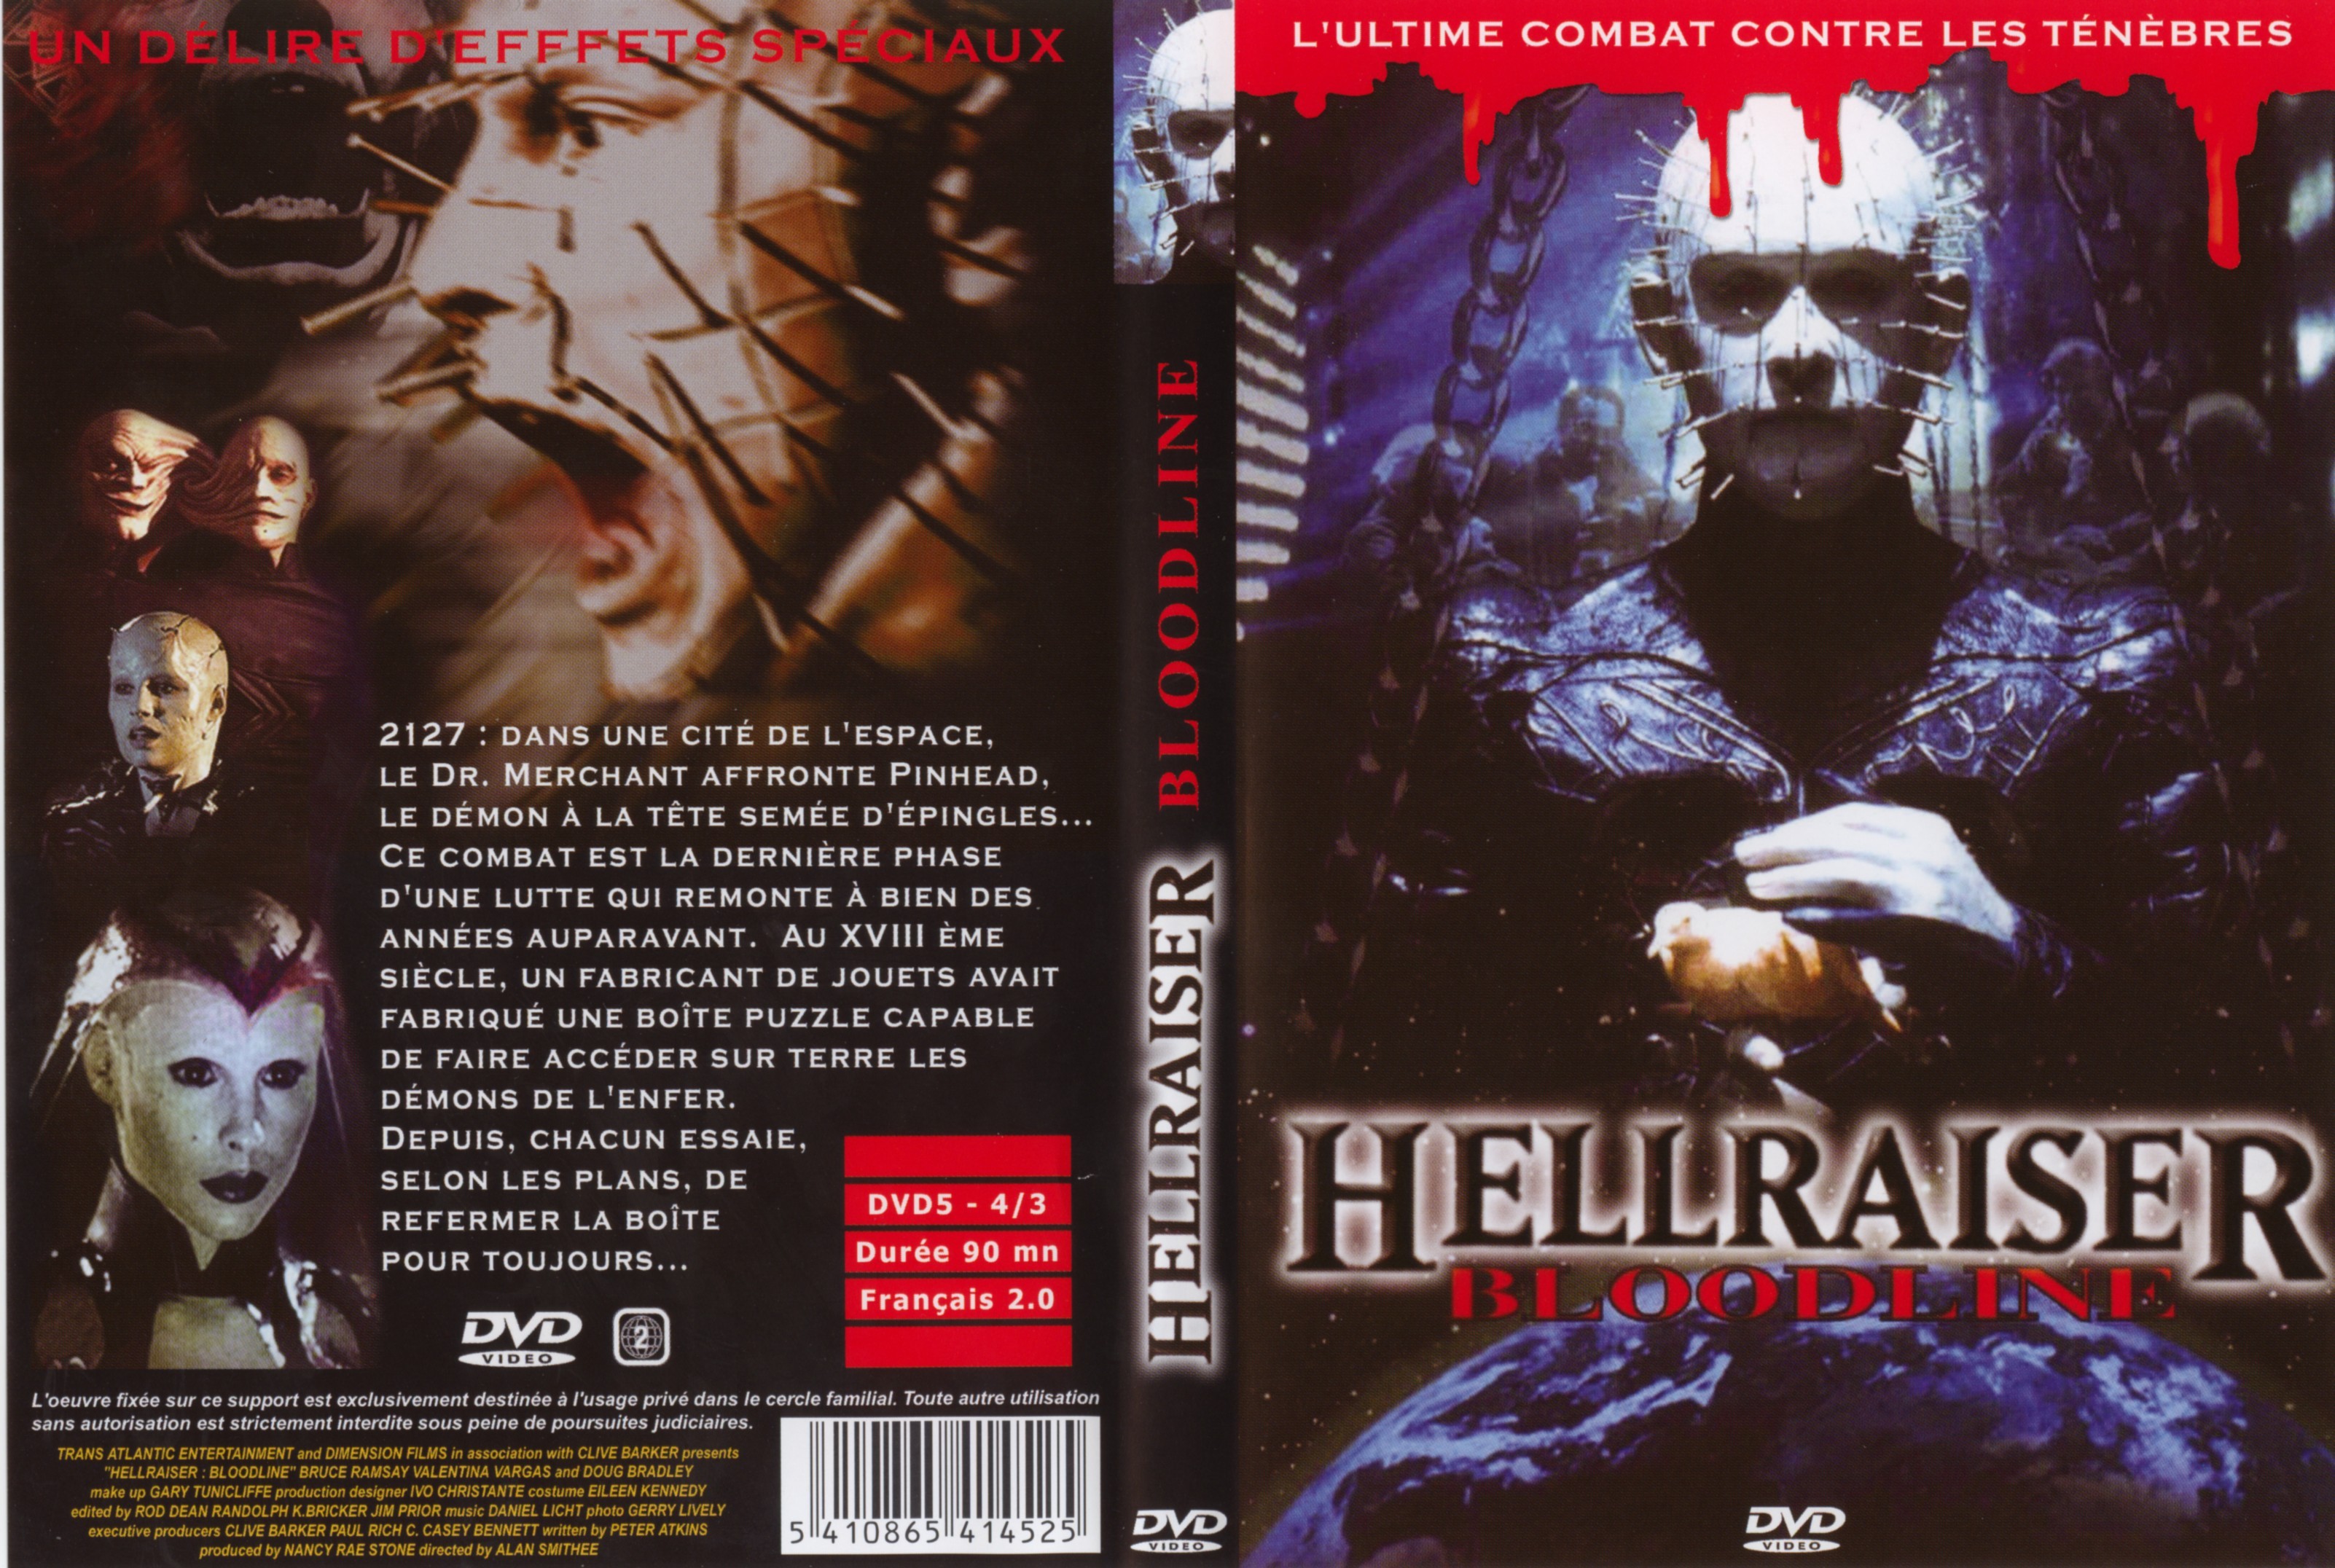 Jaquette DVD Hellraiser bloodline